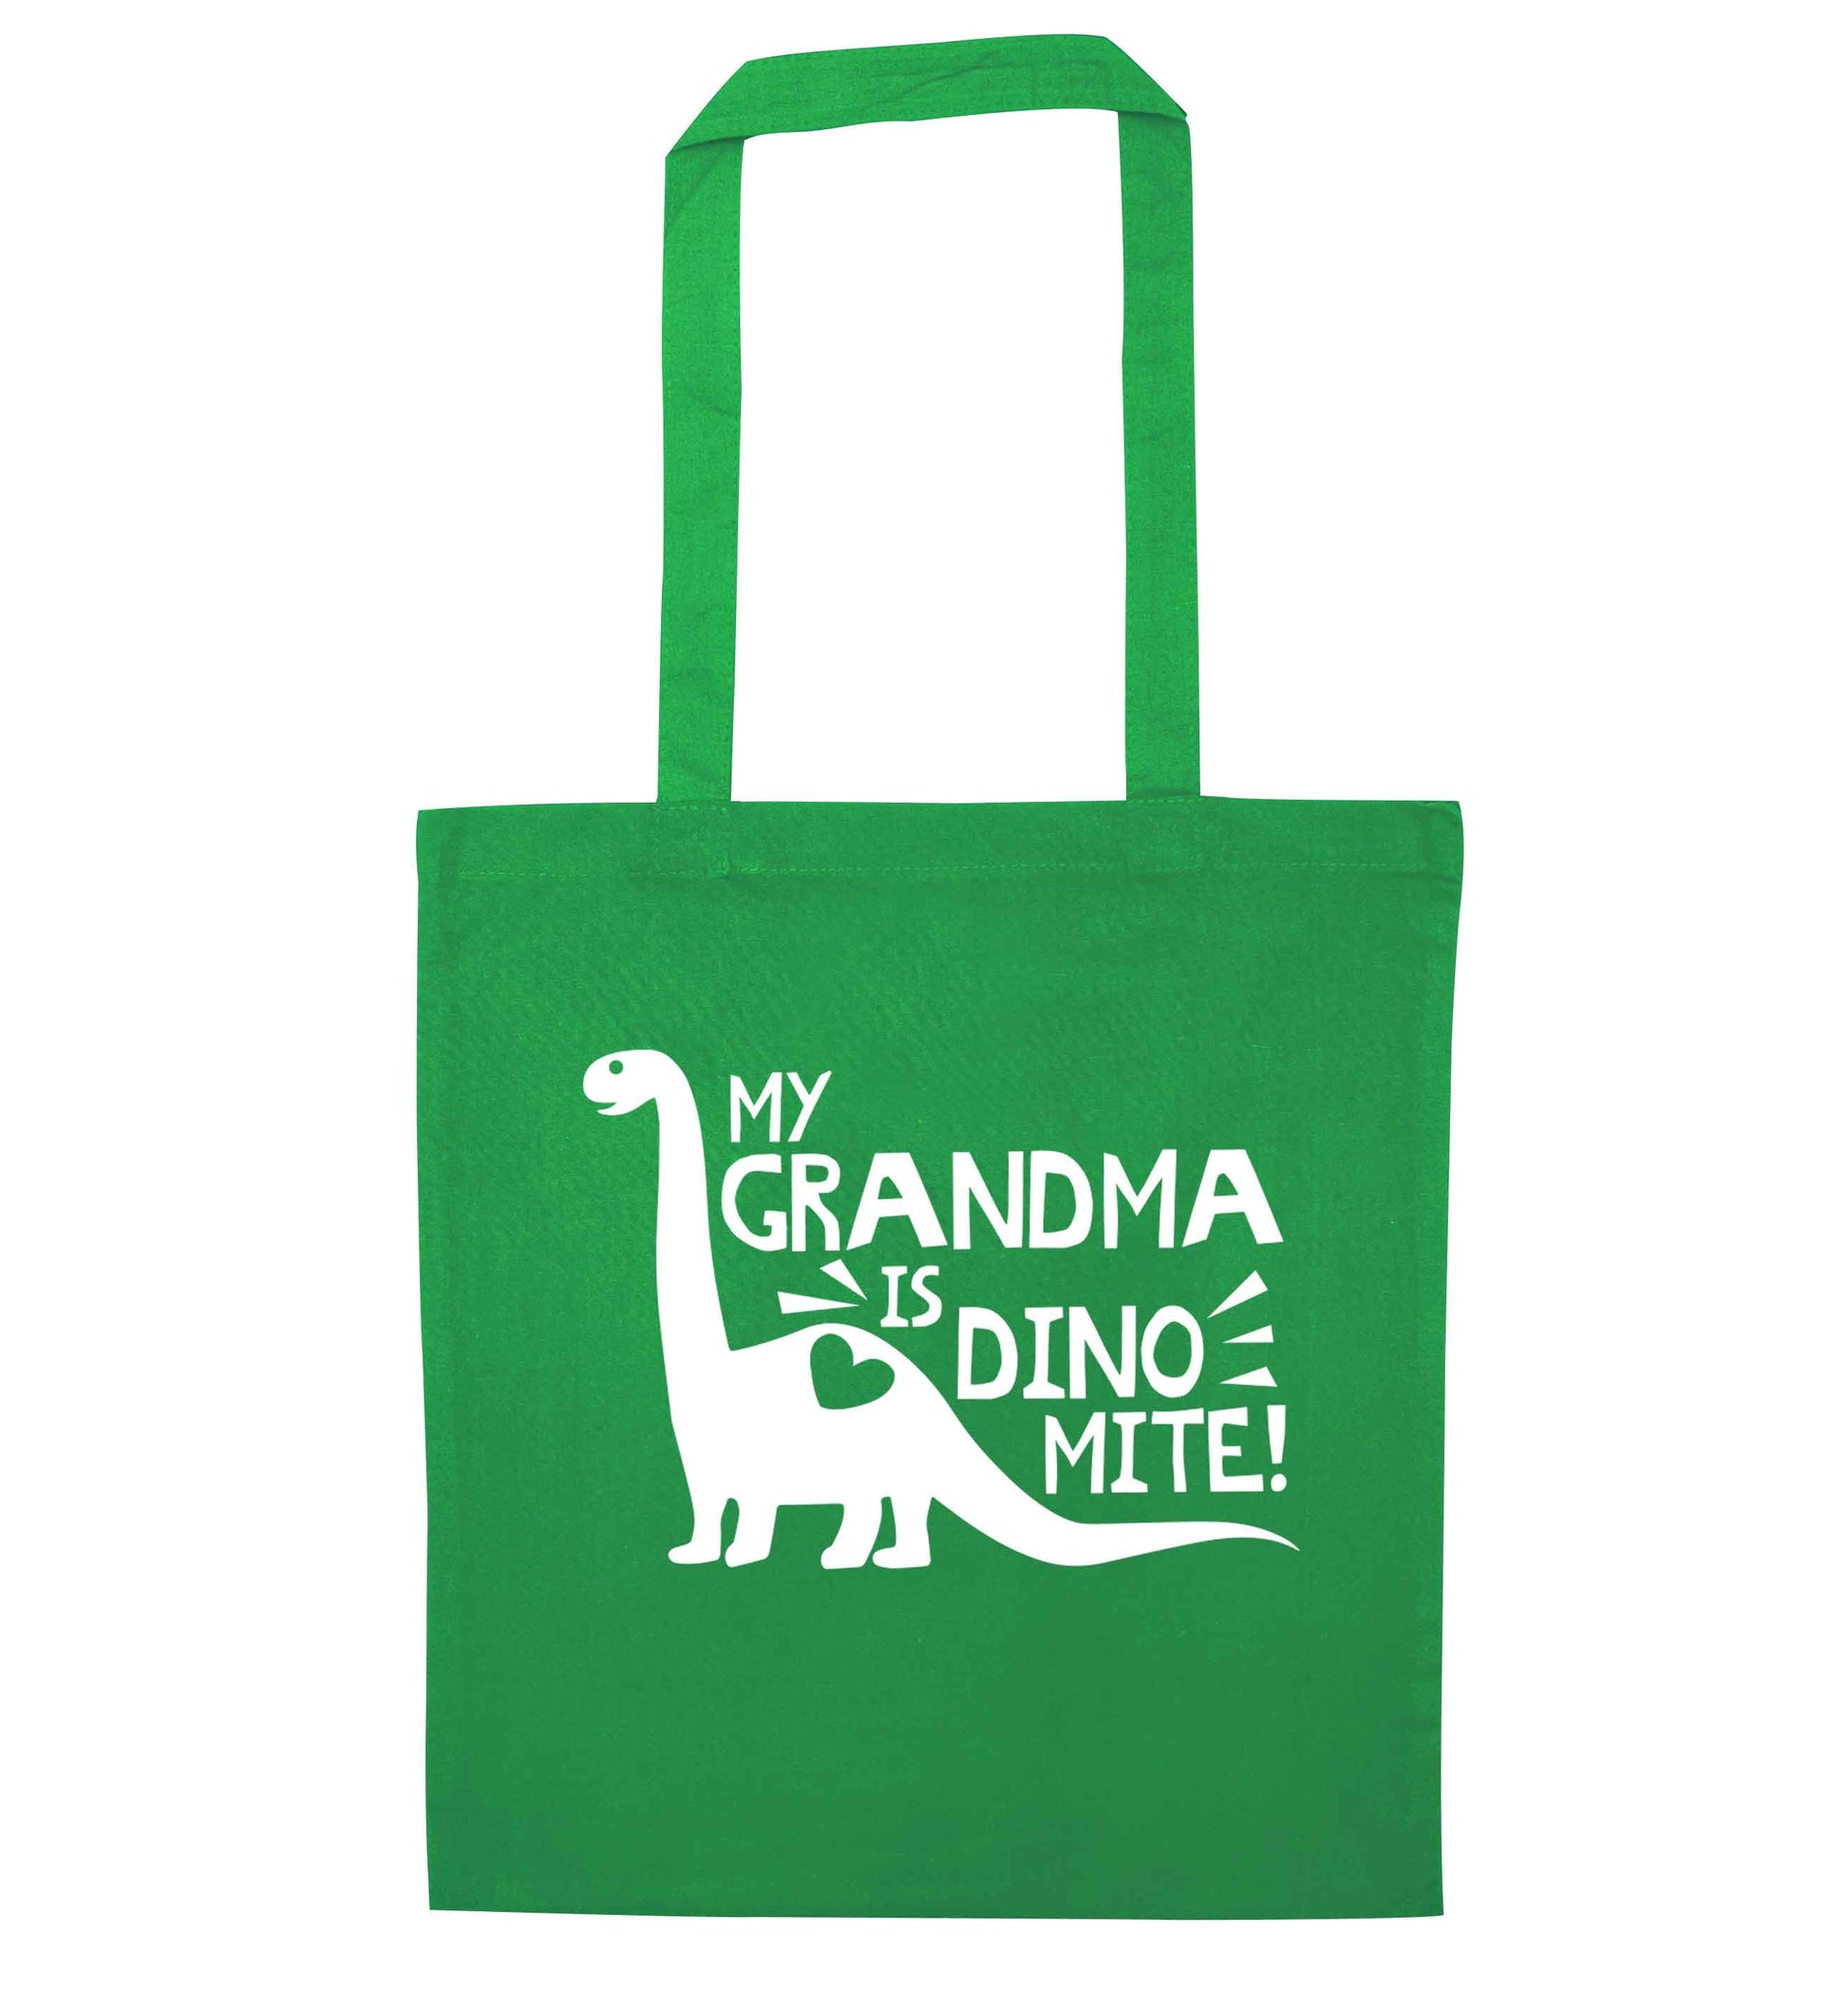 My grandma is dinomite! green tote bag